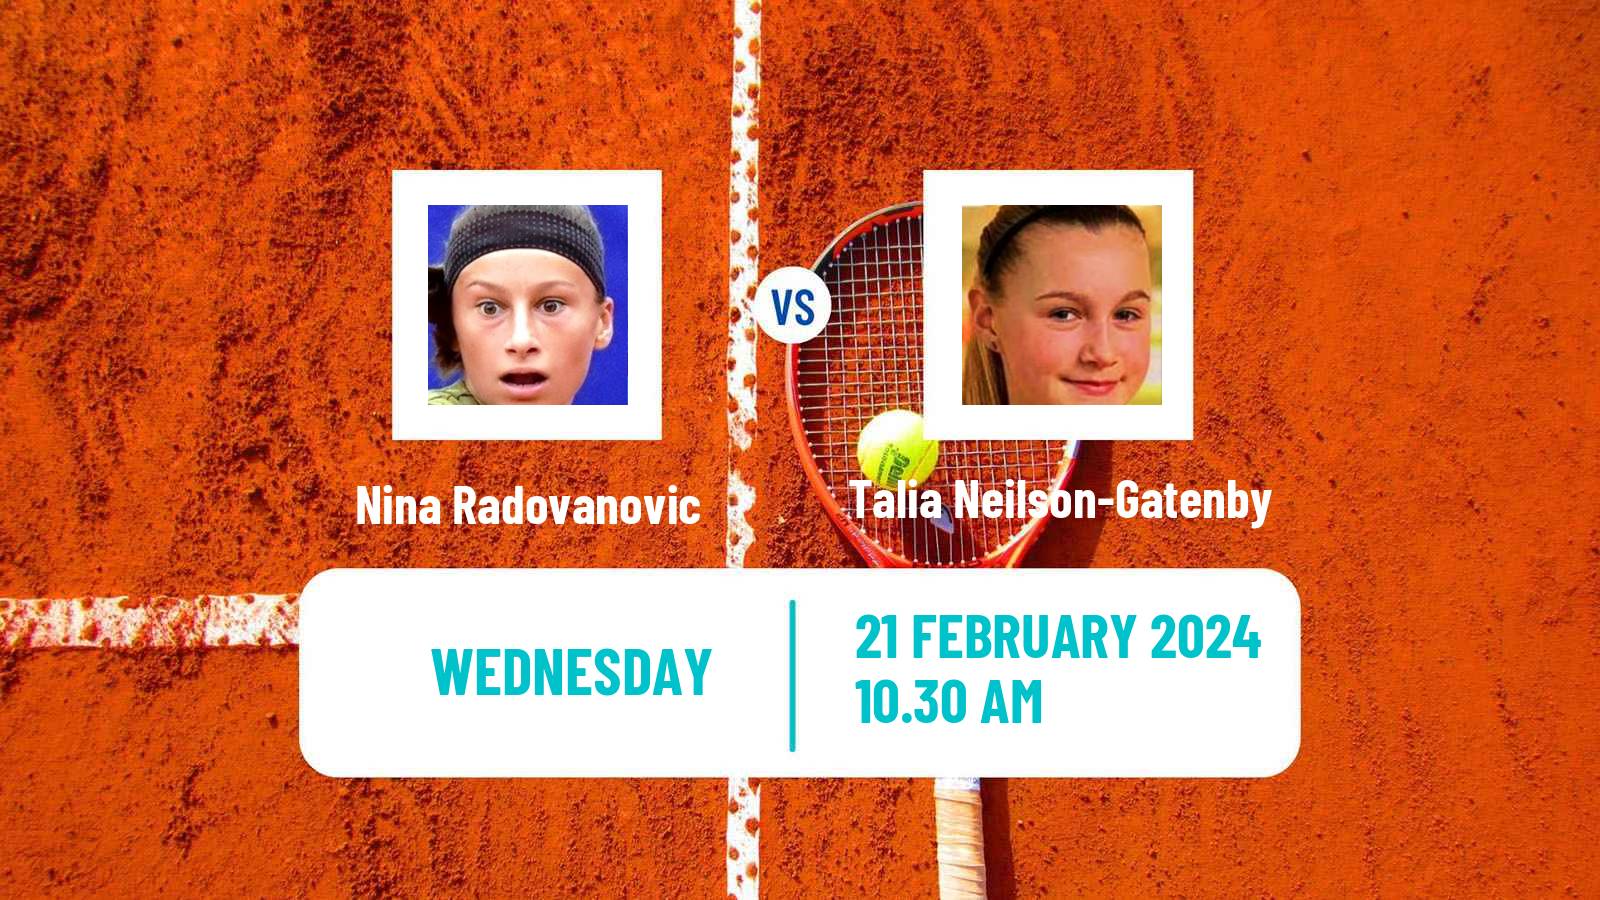 Tennis ITF W15 Monastir 6 Women Nina Radovanovic - Talia Neilson-Gatenby